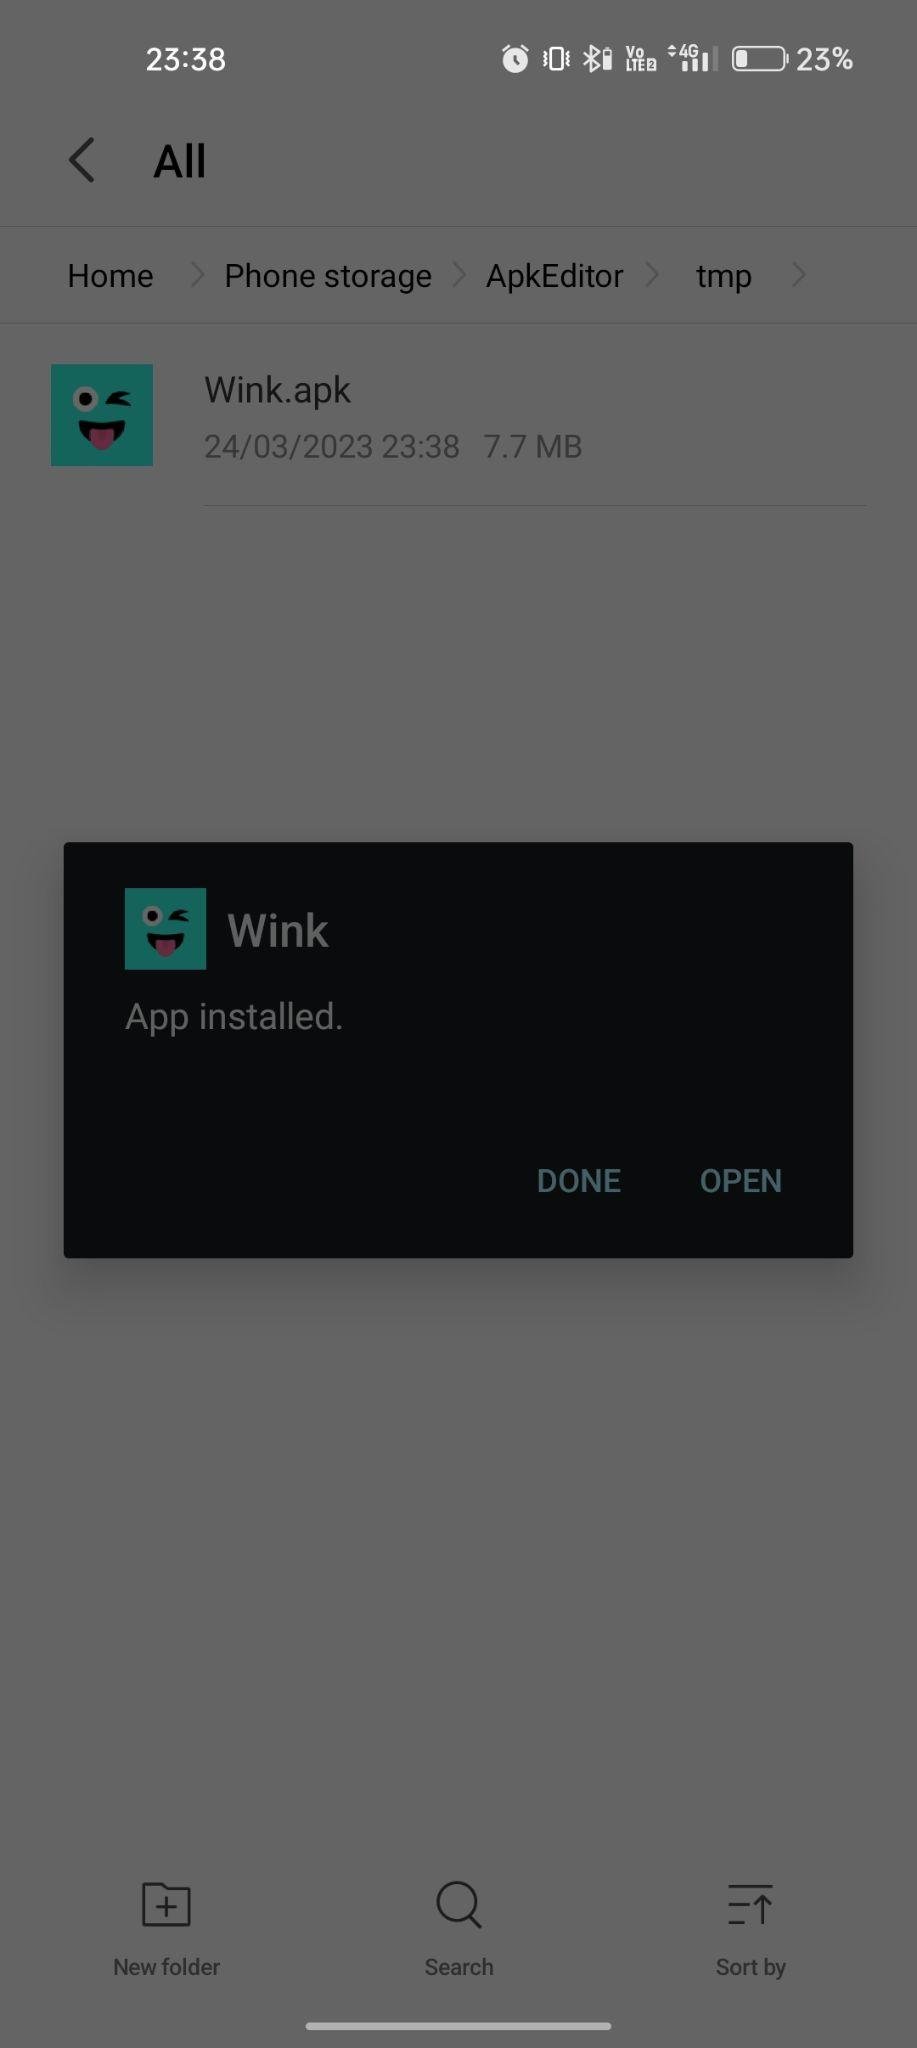 Wink apk installed